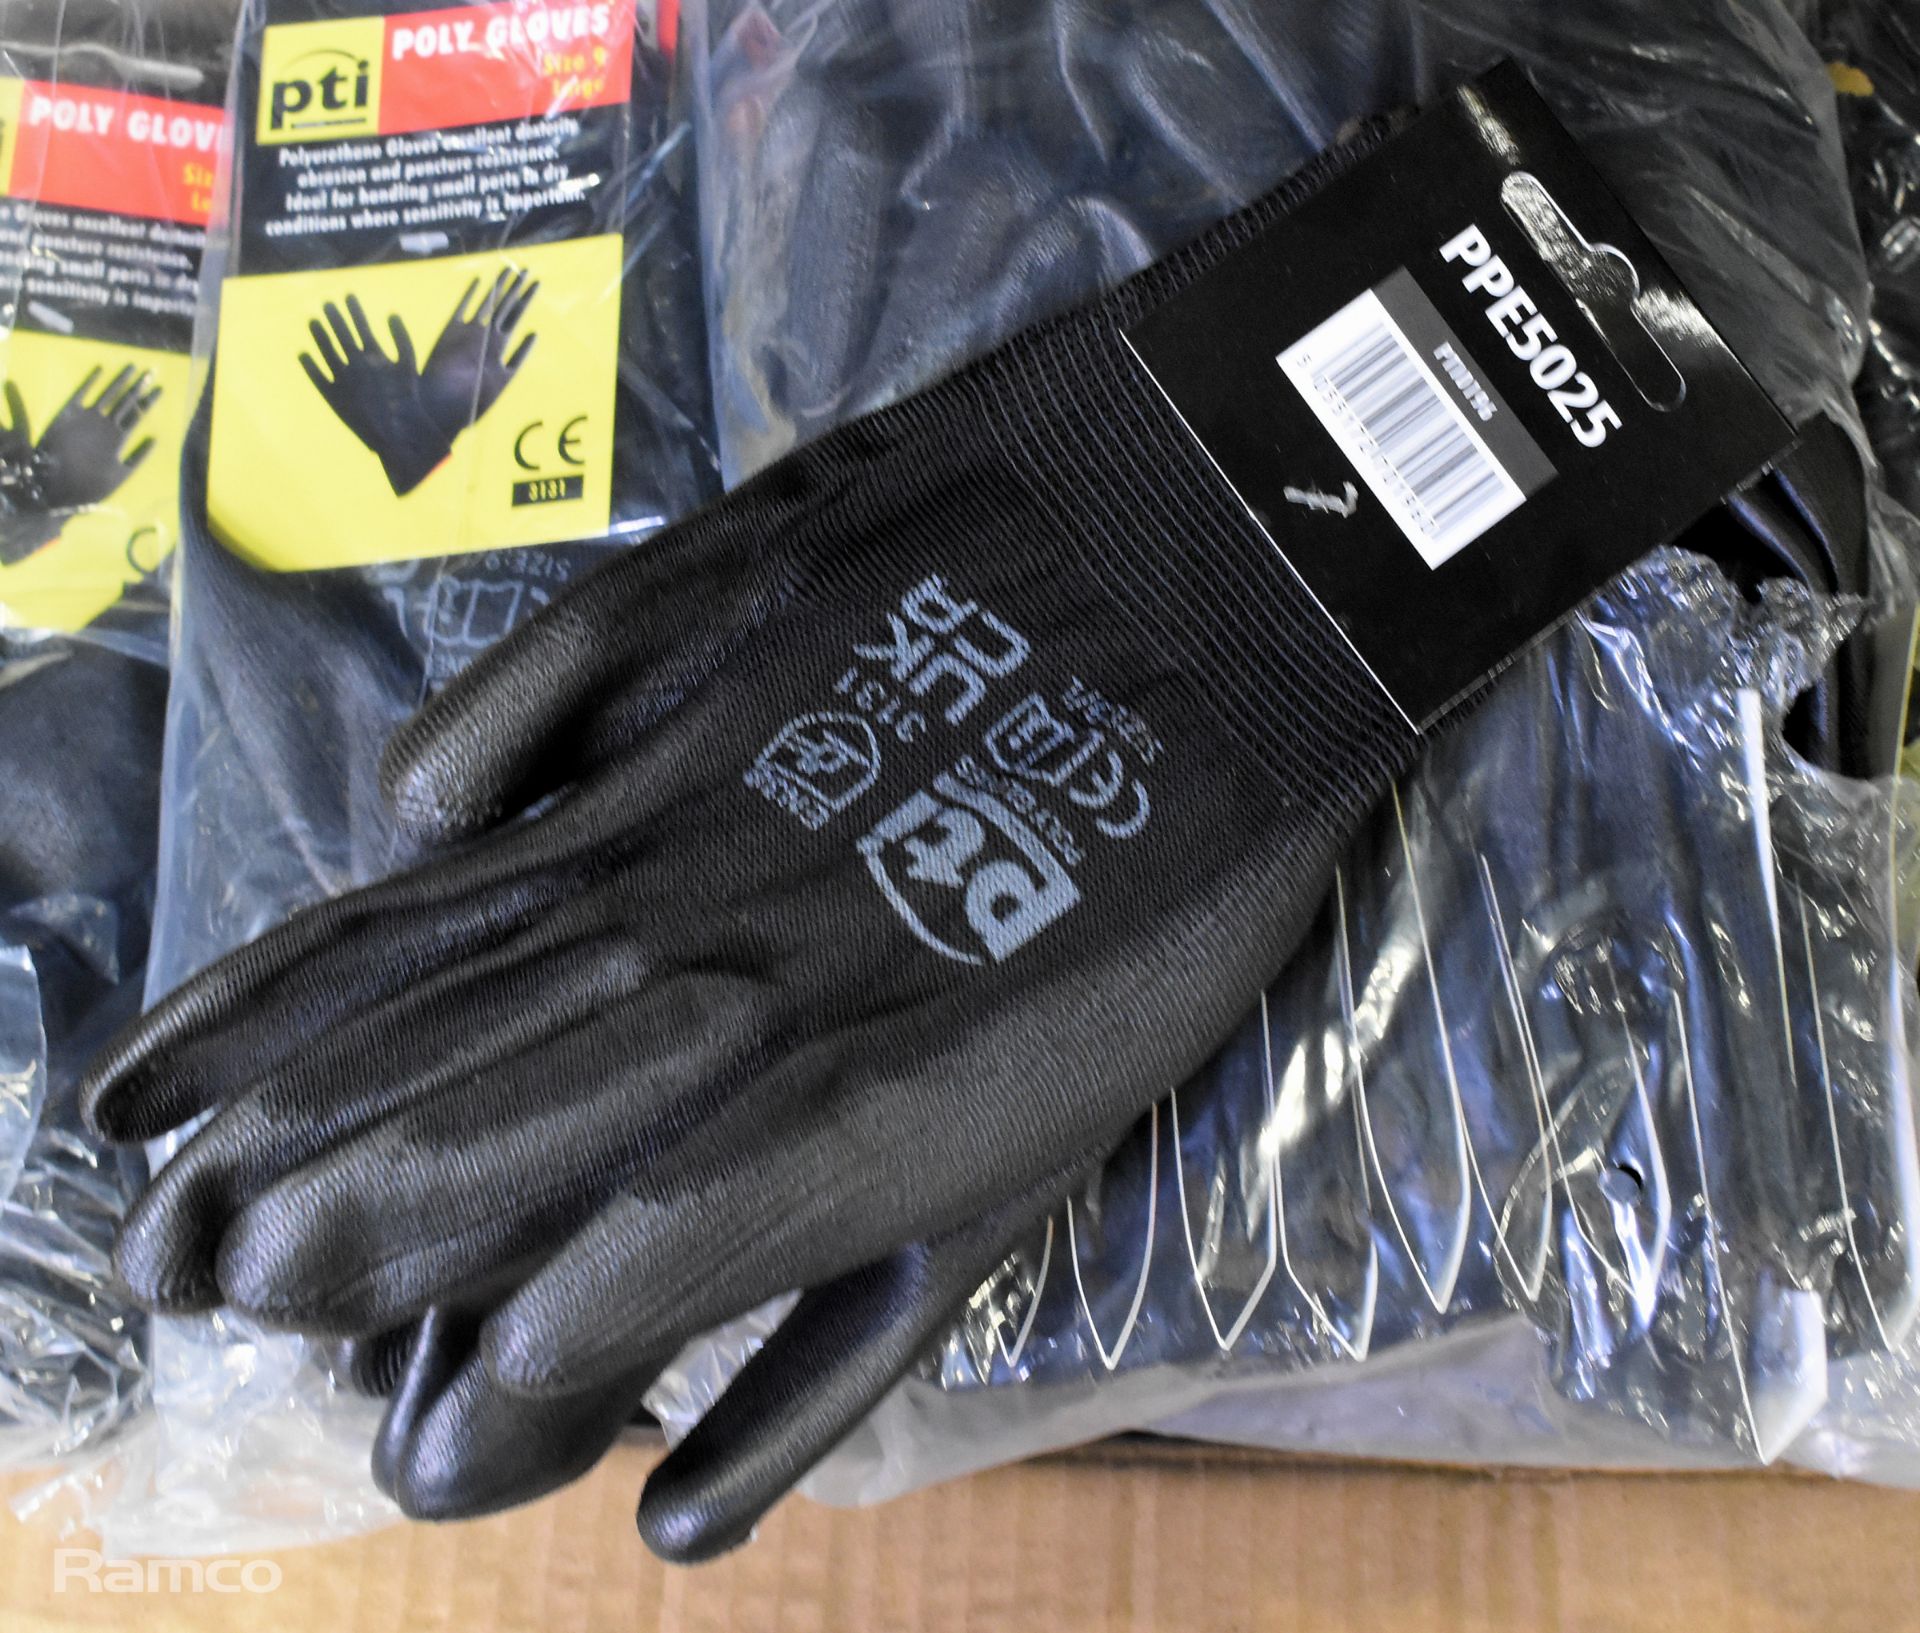 PTI Poly work gloves - size 9 large - 240 pairs - Bild 3 aus 3